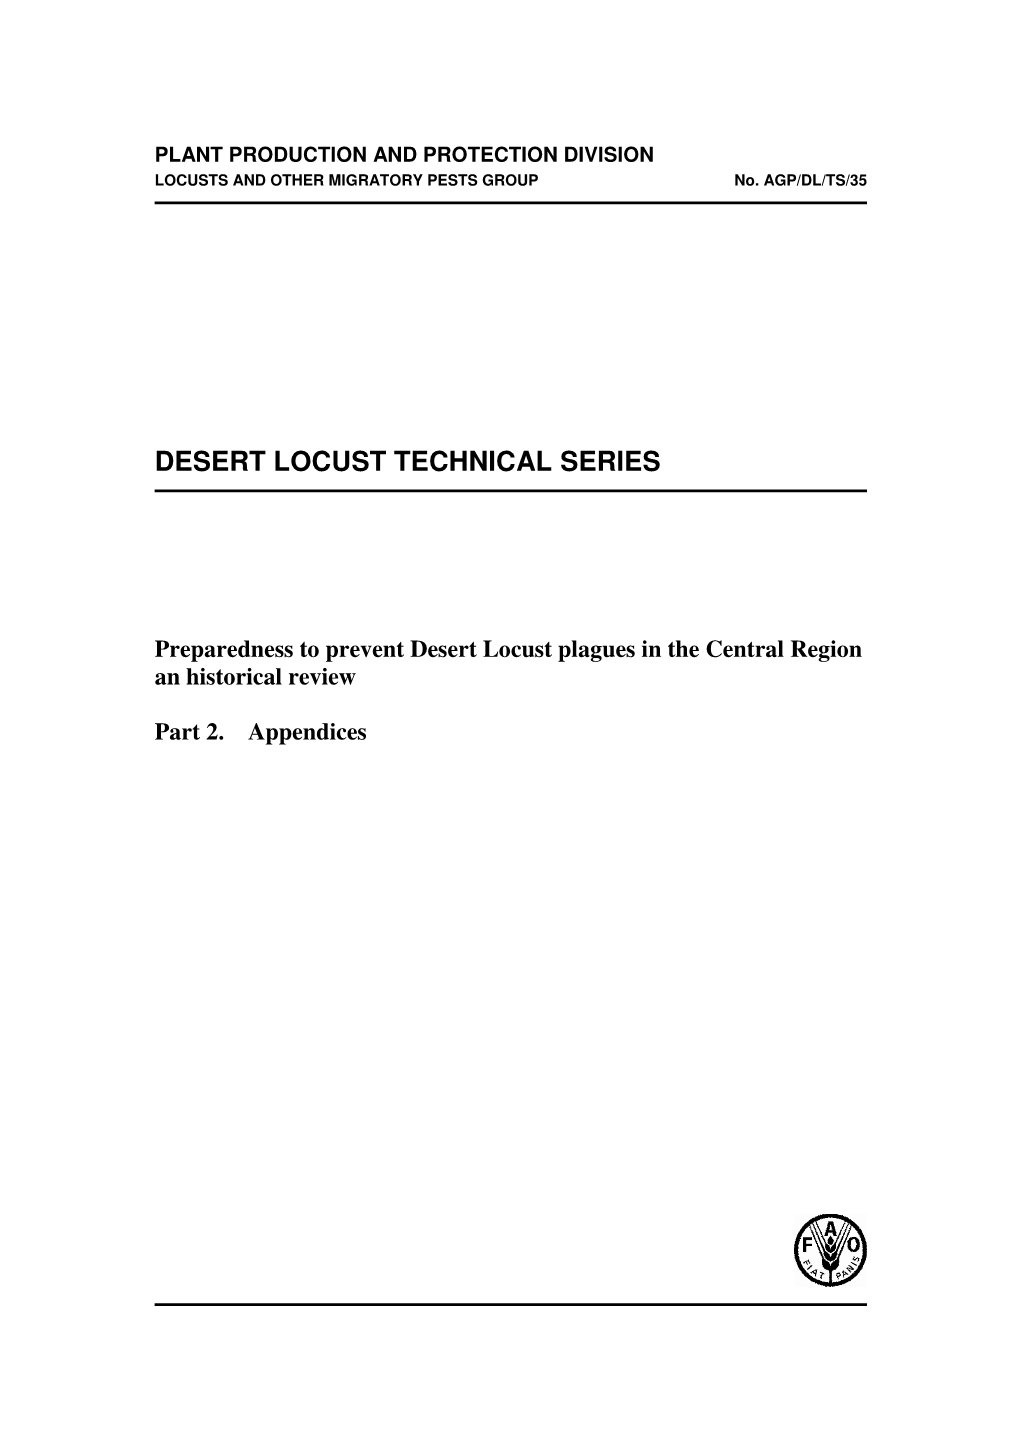 Desert Locust Technical Series